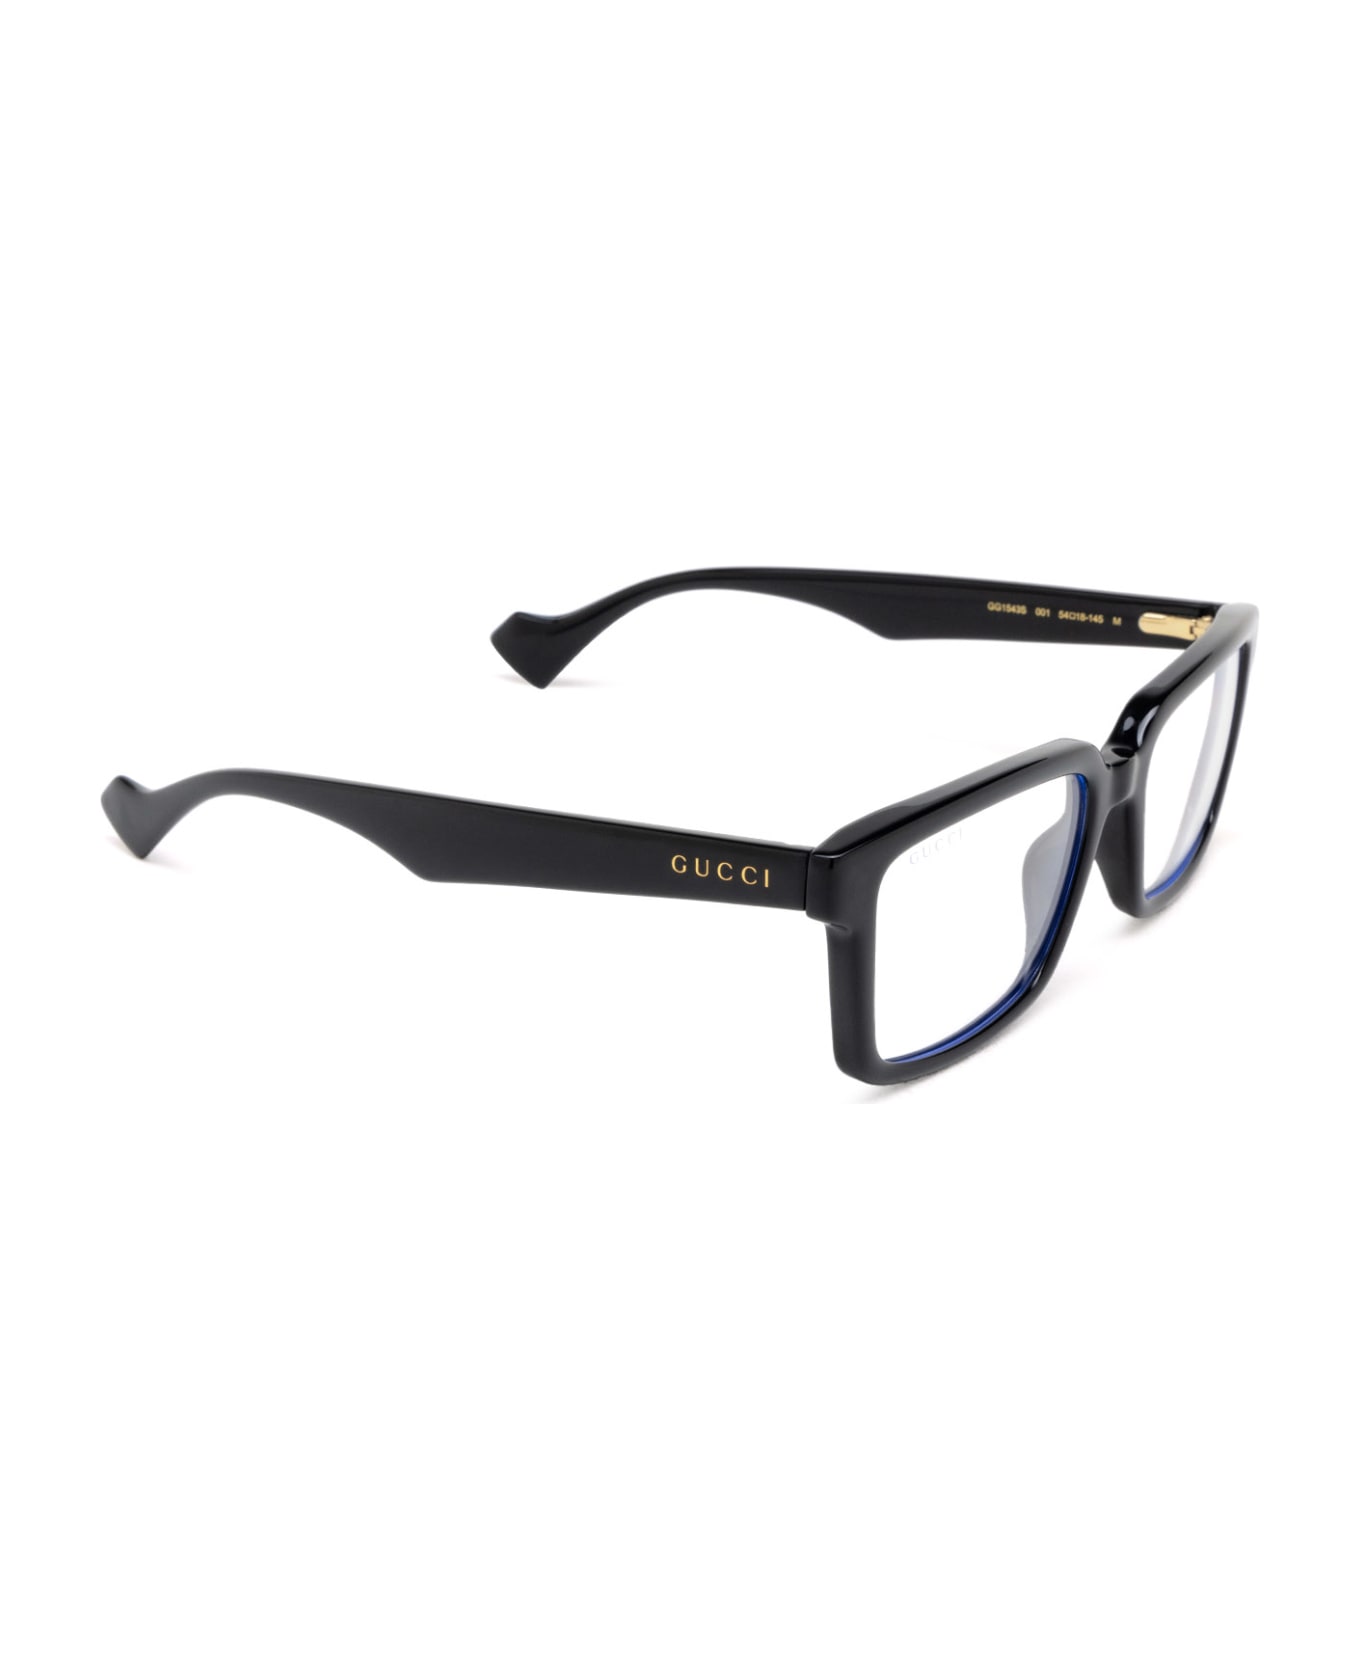 Gucci Eyewear Gg1543s Black Sunglasses - Black